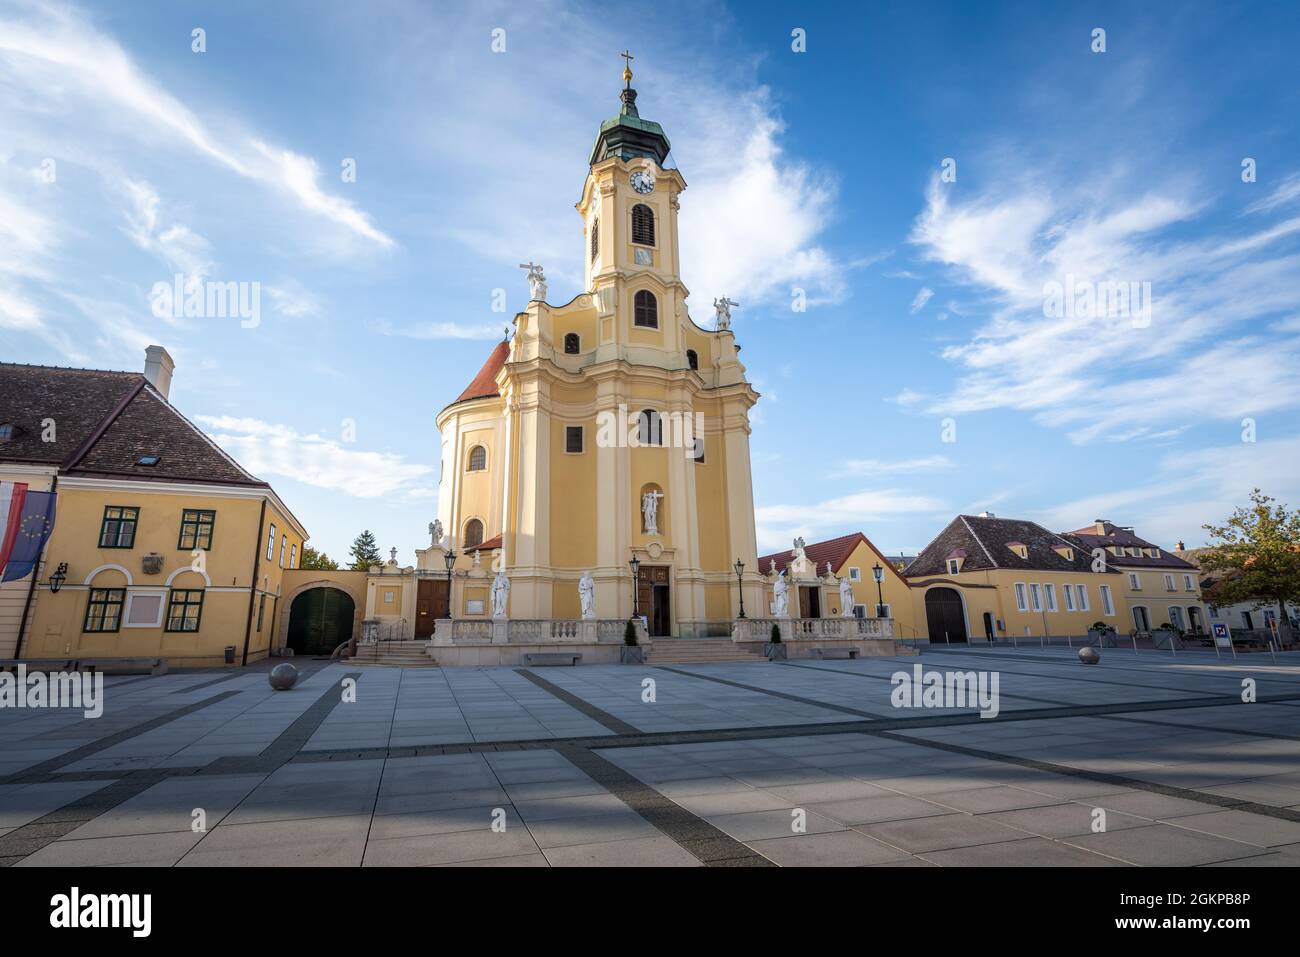 Chiesa cattolica di Laxenburg - Laxenburg, Austria Foto Stock